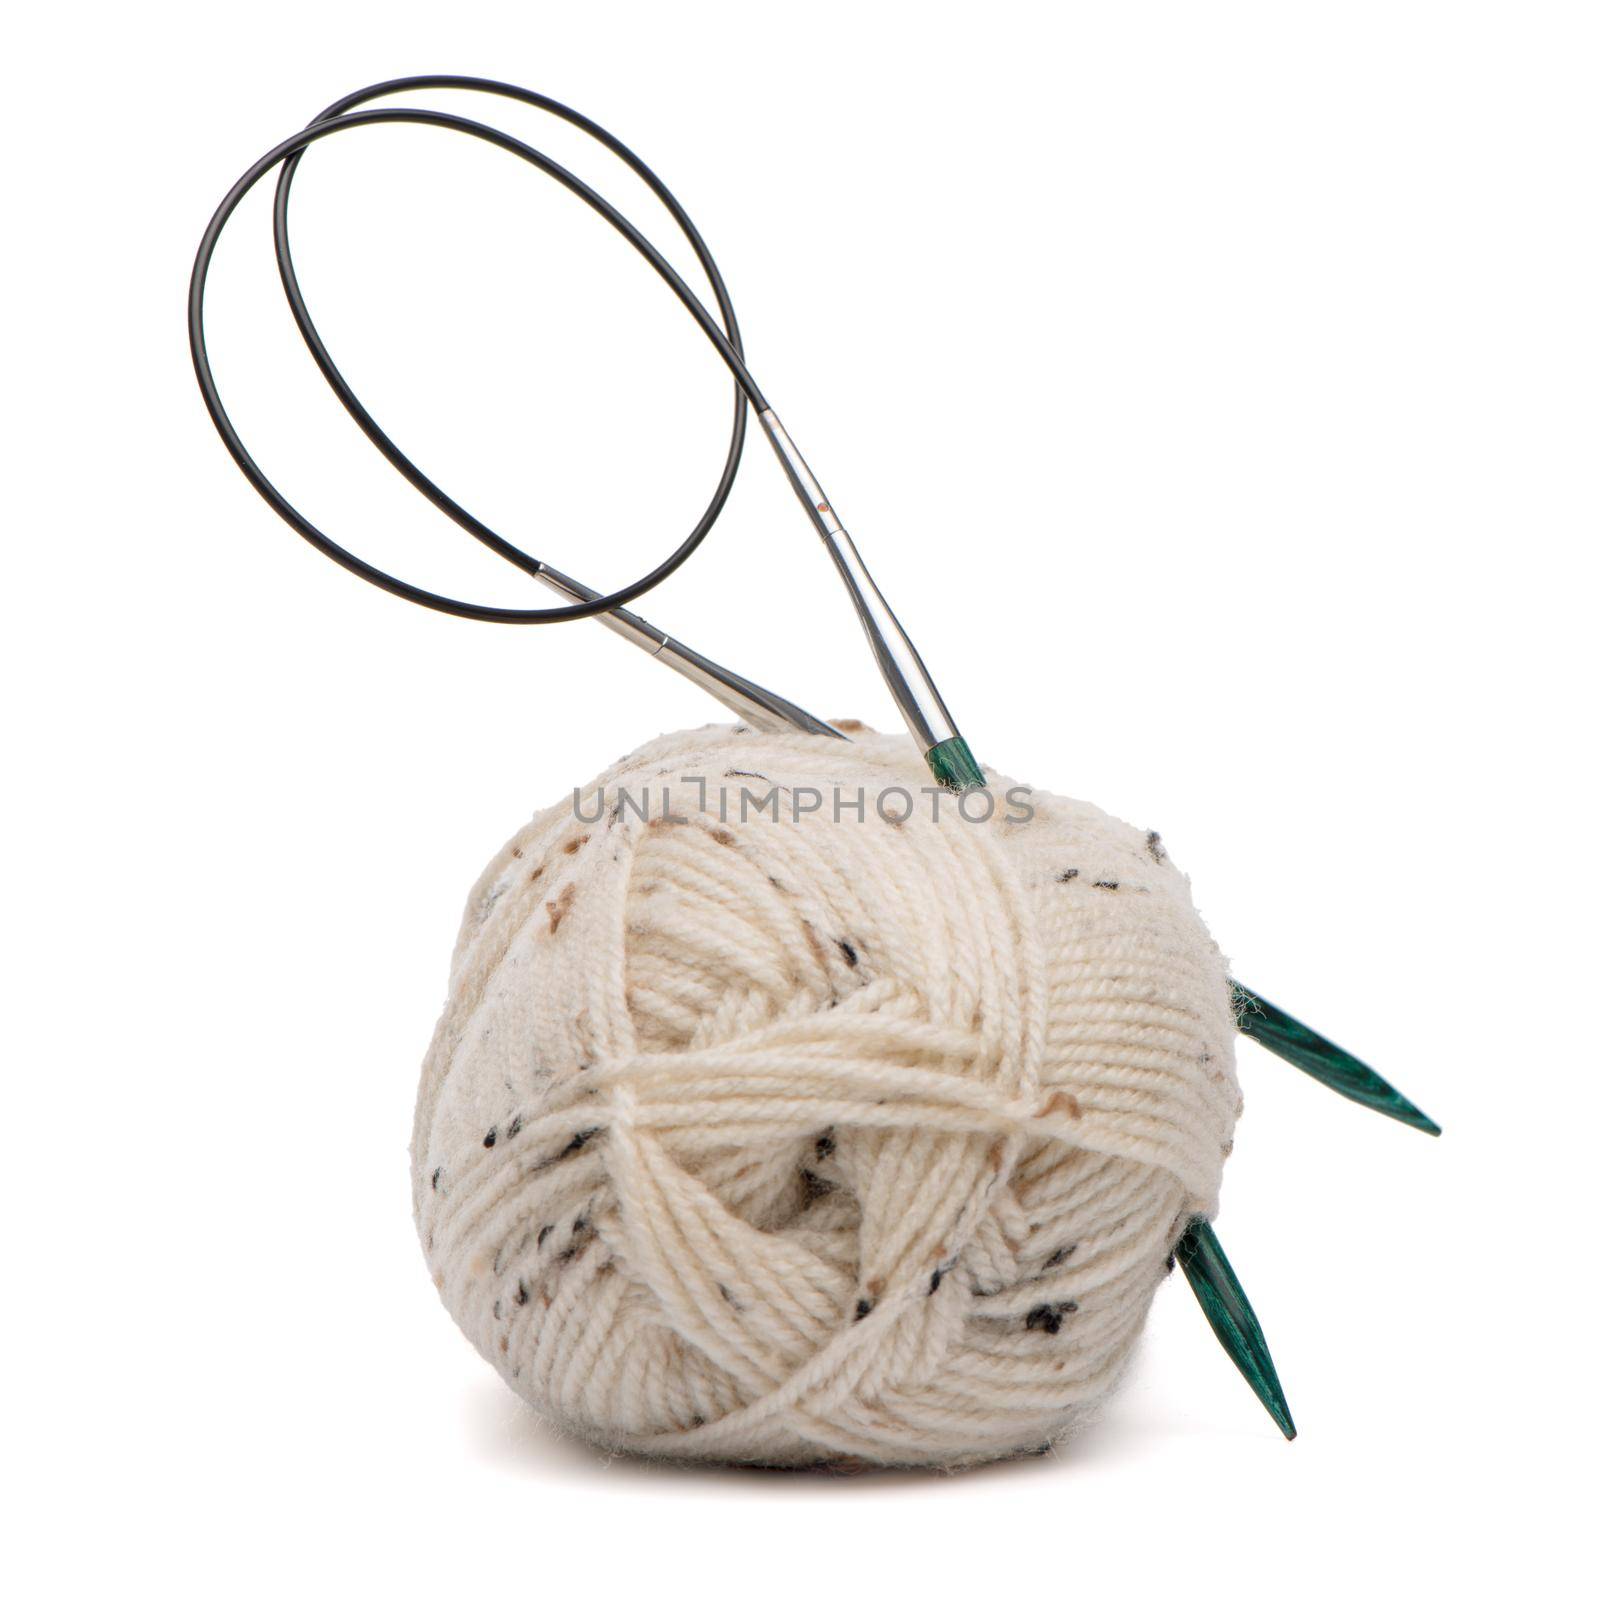 Beige knitting wool or yarn with knitting needles.